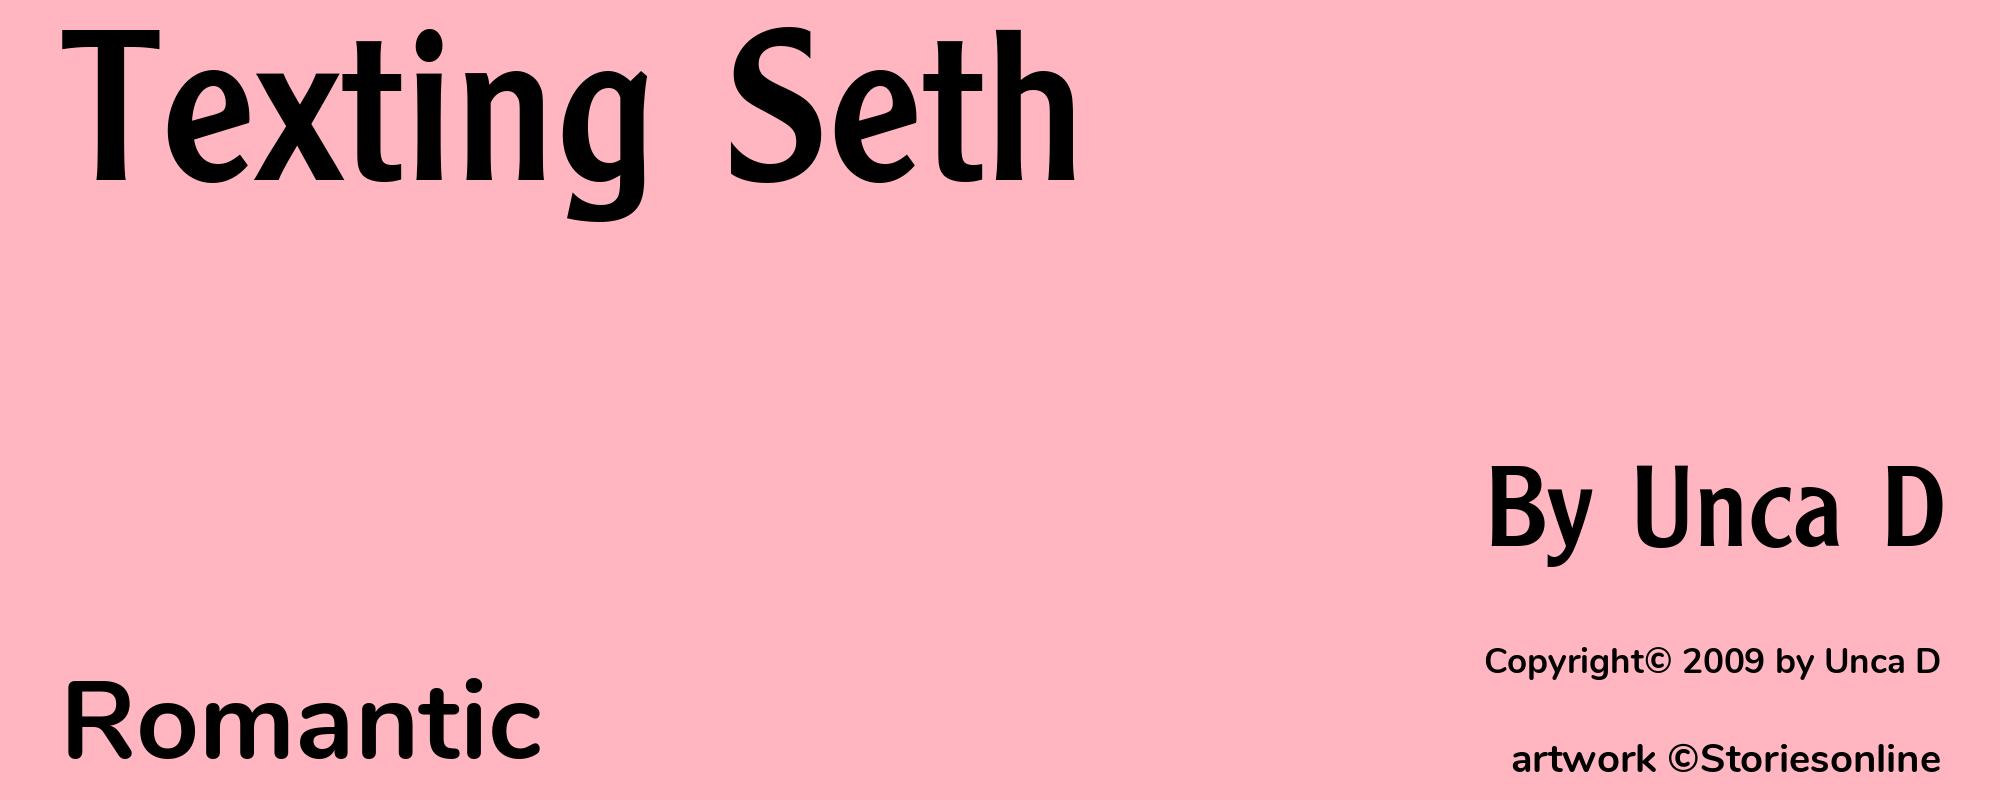 Texting Seth - Cover